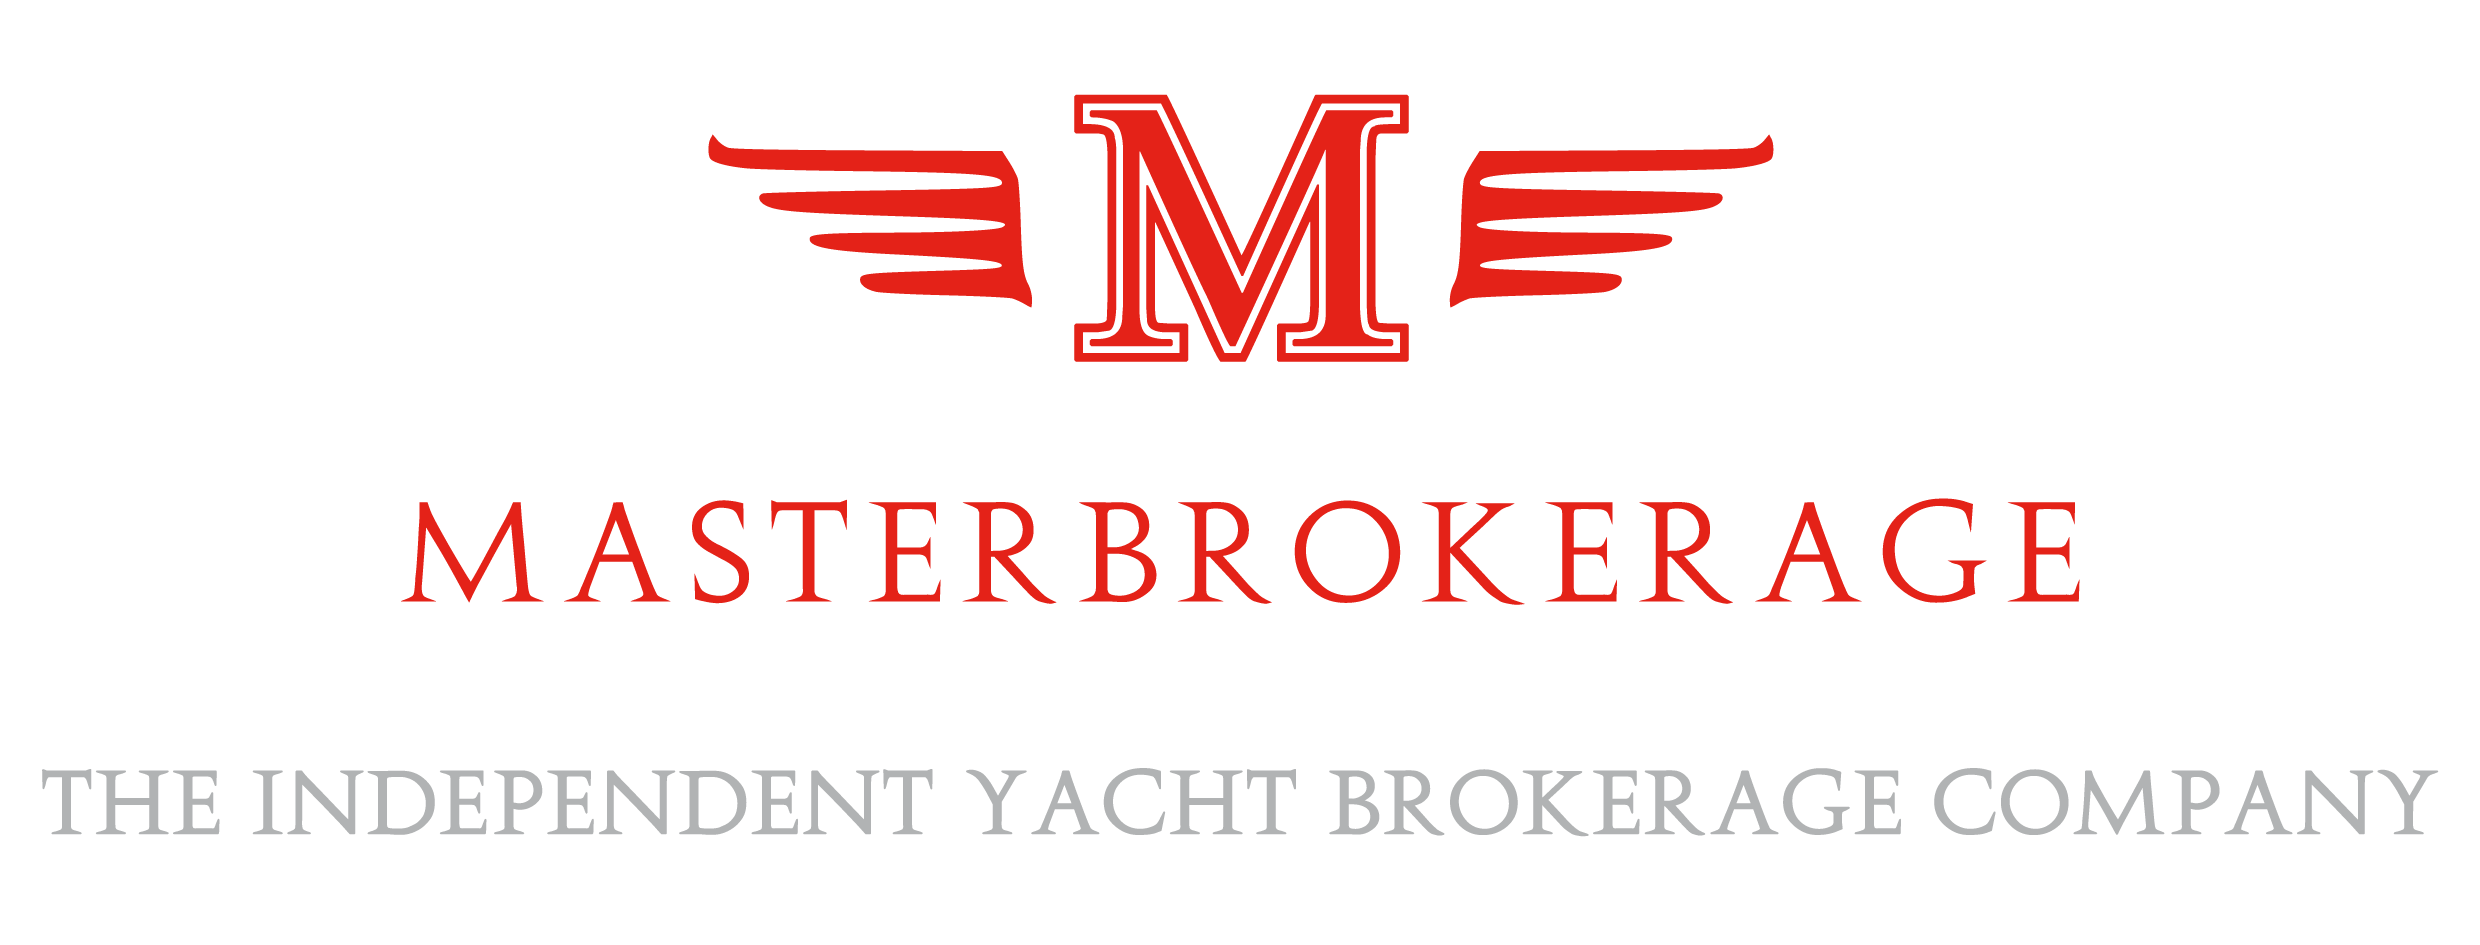 Logotipo Master Brokerage srl